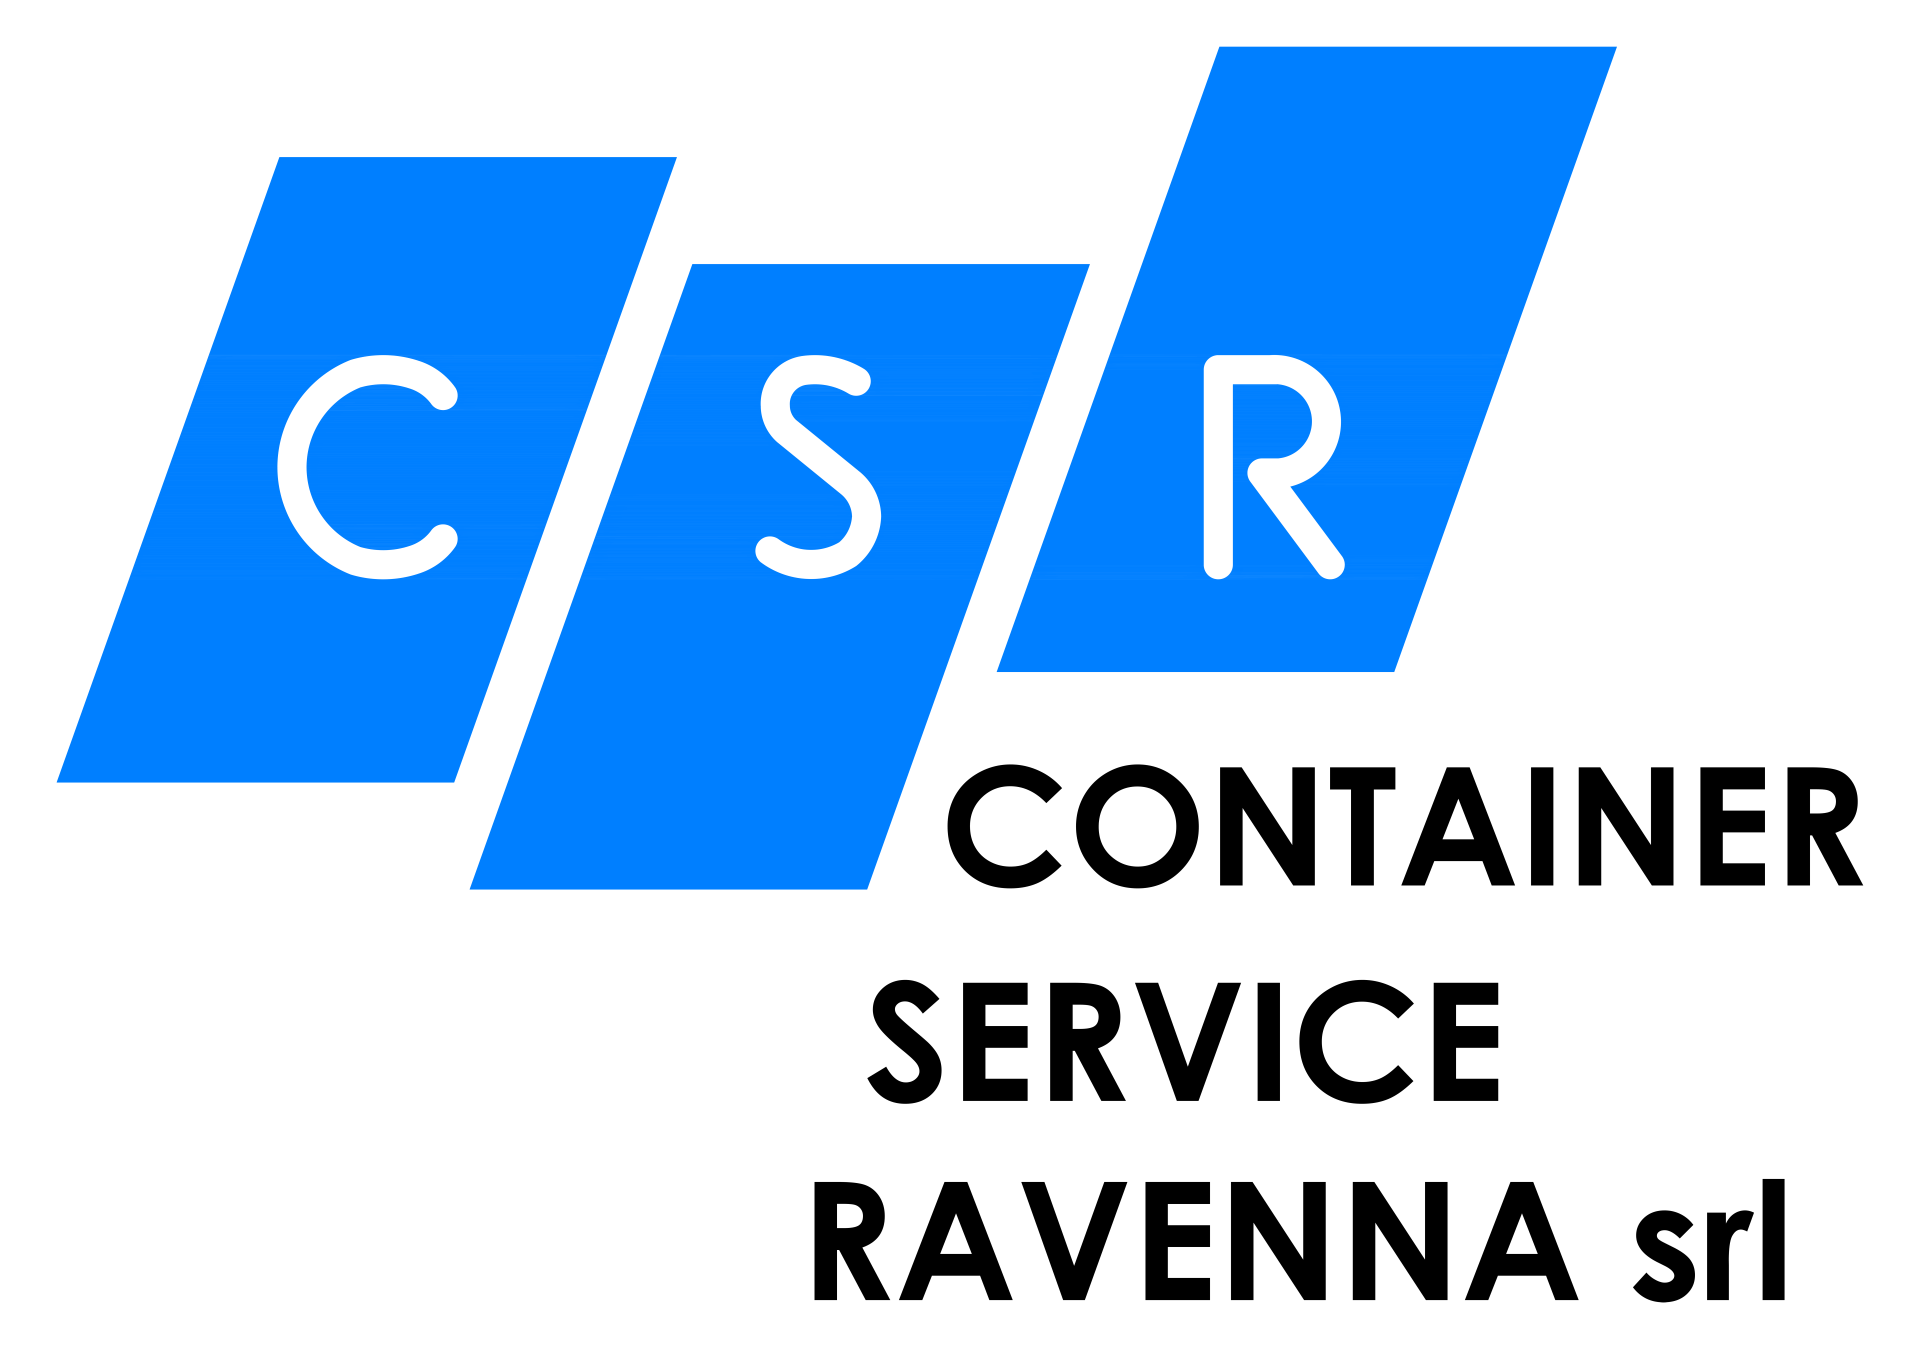 CONTAINER SERVICE RAVENNA-LOGO